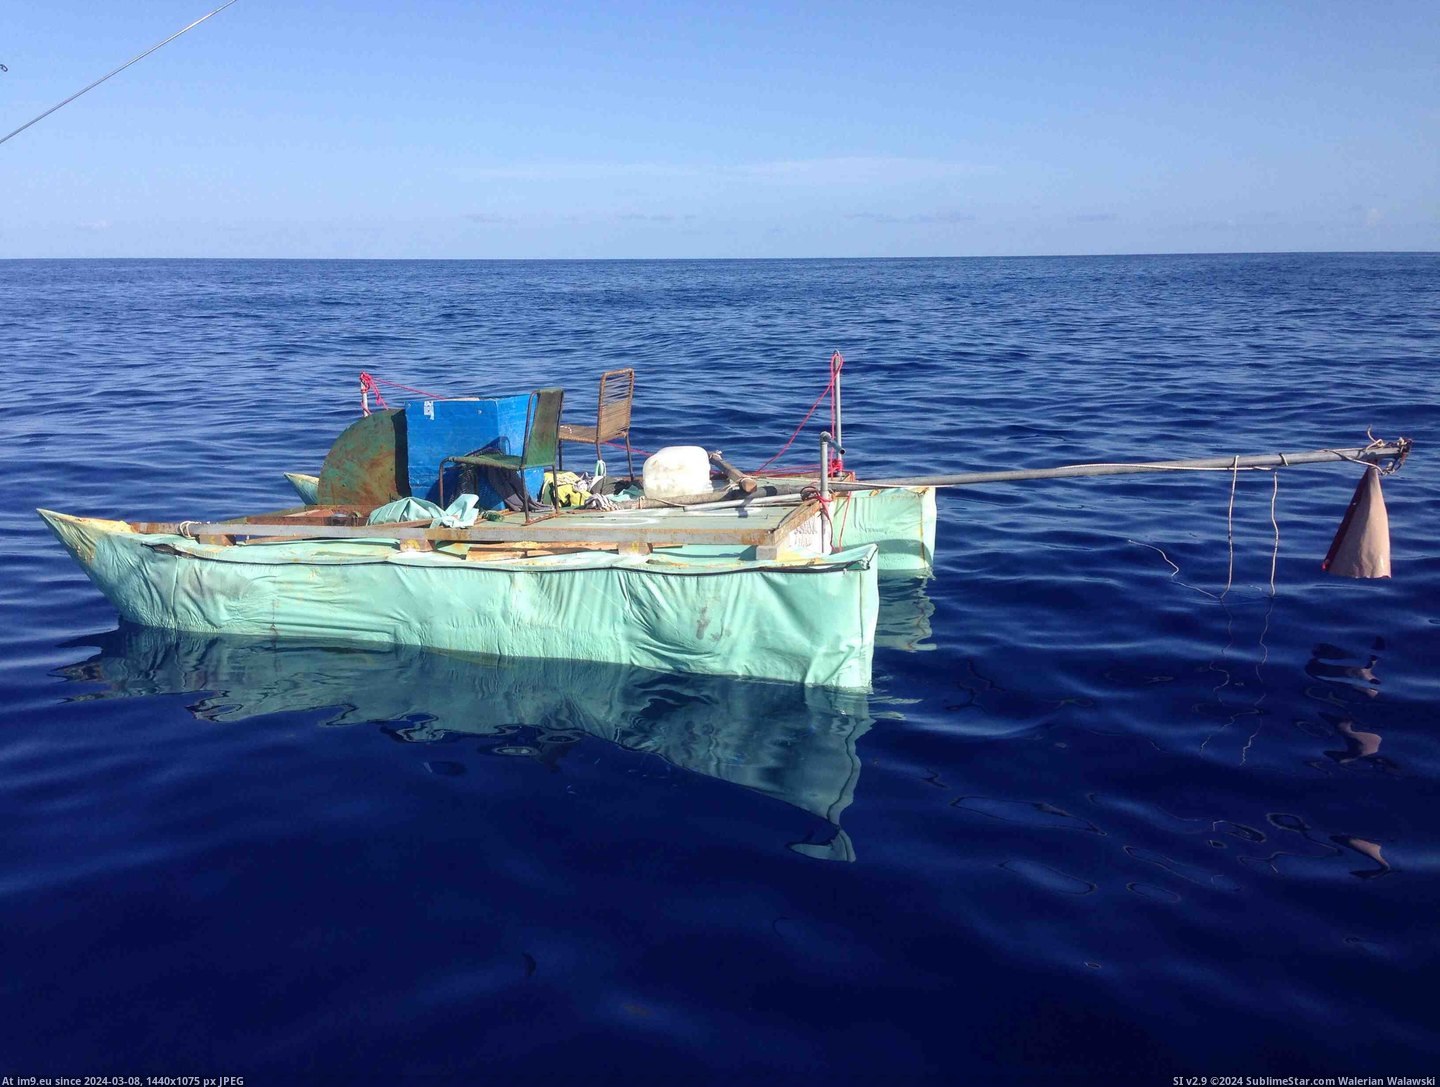 #Sea #Abandoned #Cuban #Fishing #Raft [Pics] While fishing, we found an abandoned Cuban raft while at sea. Pic. (Bild von album My r/PICS favs))